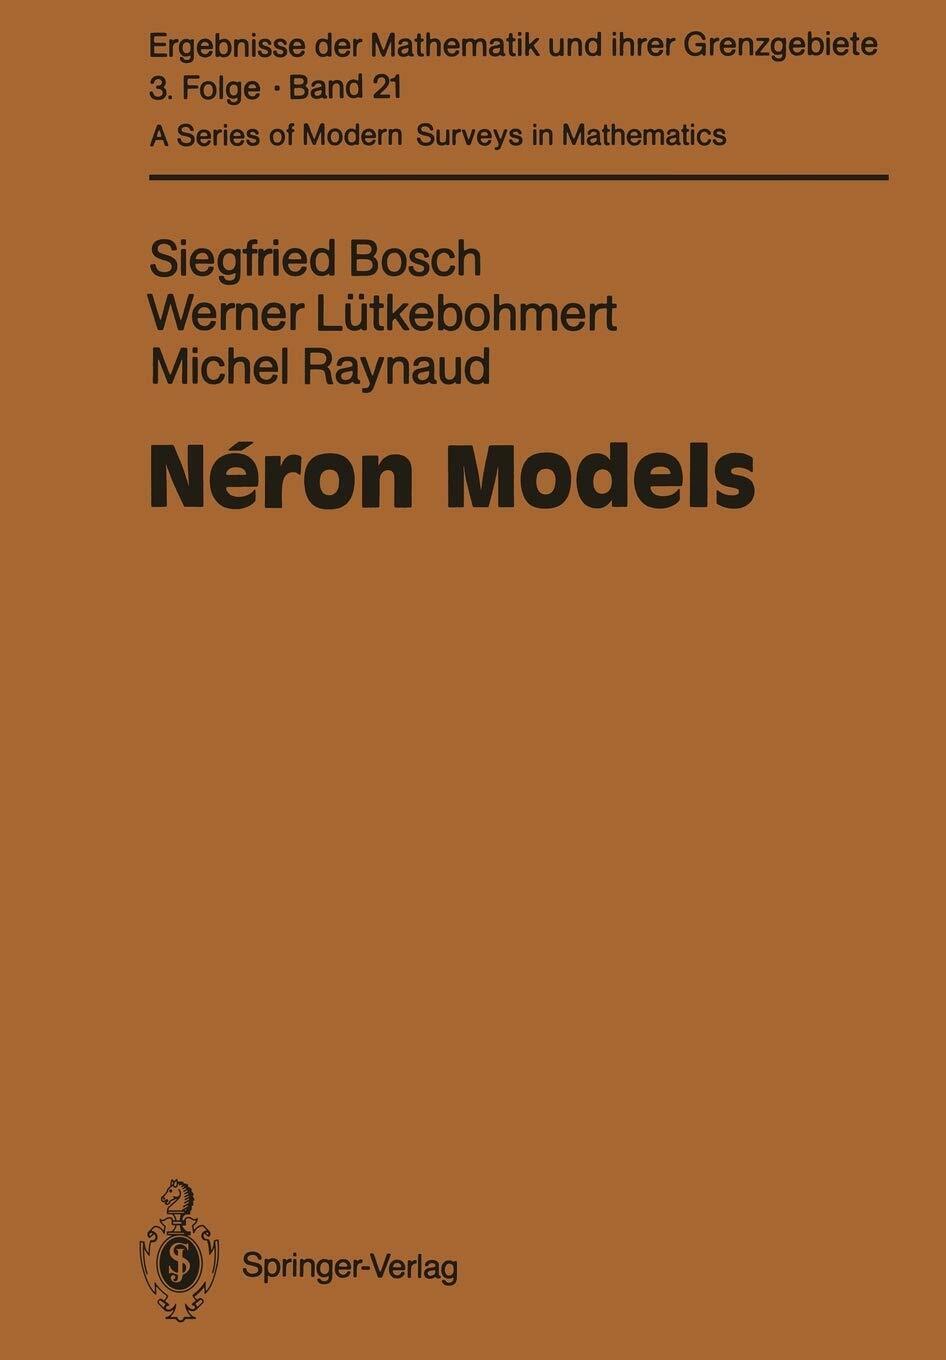 Neron Models - Siegfried Bosch, Werner L?tkebohmert, Michel Raynaud - 2010